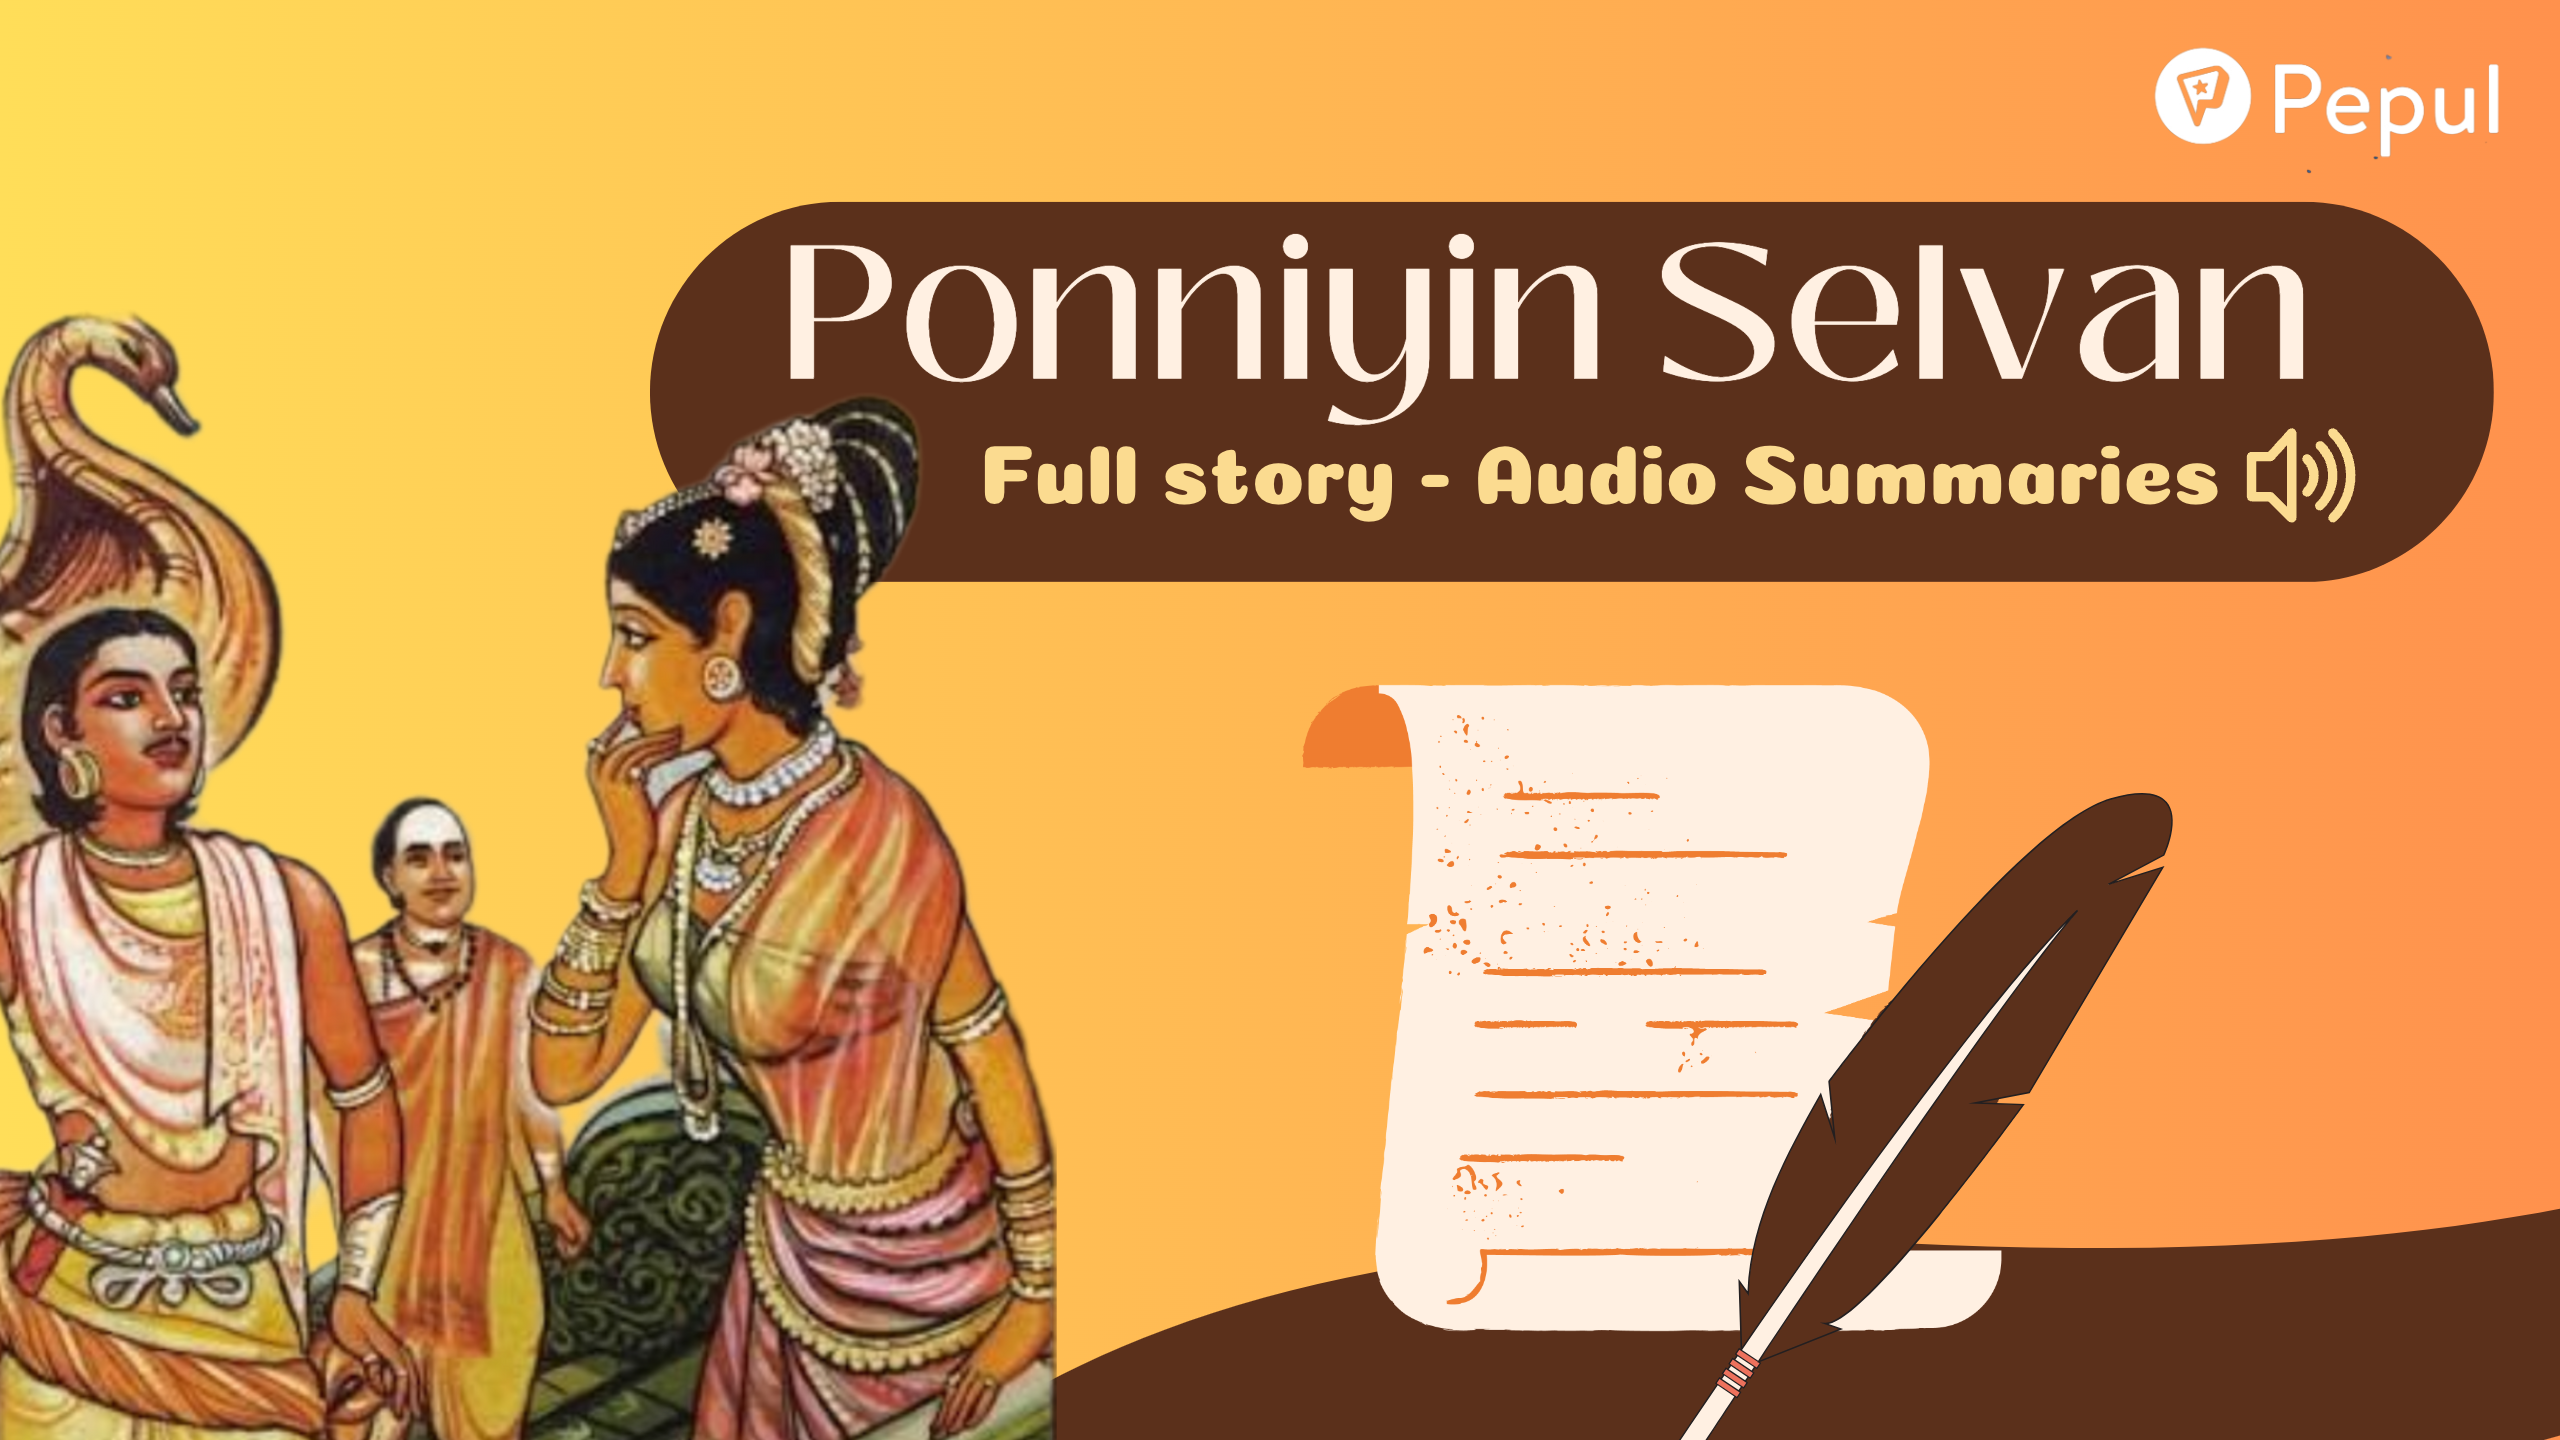 Ponniyin Selvan by Kalki – Full Audio Stories (in Tamil)